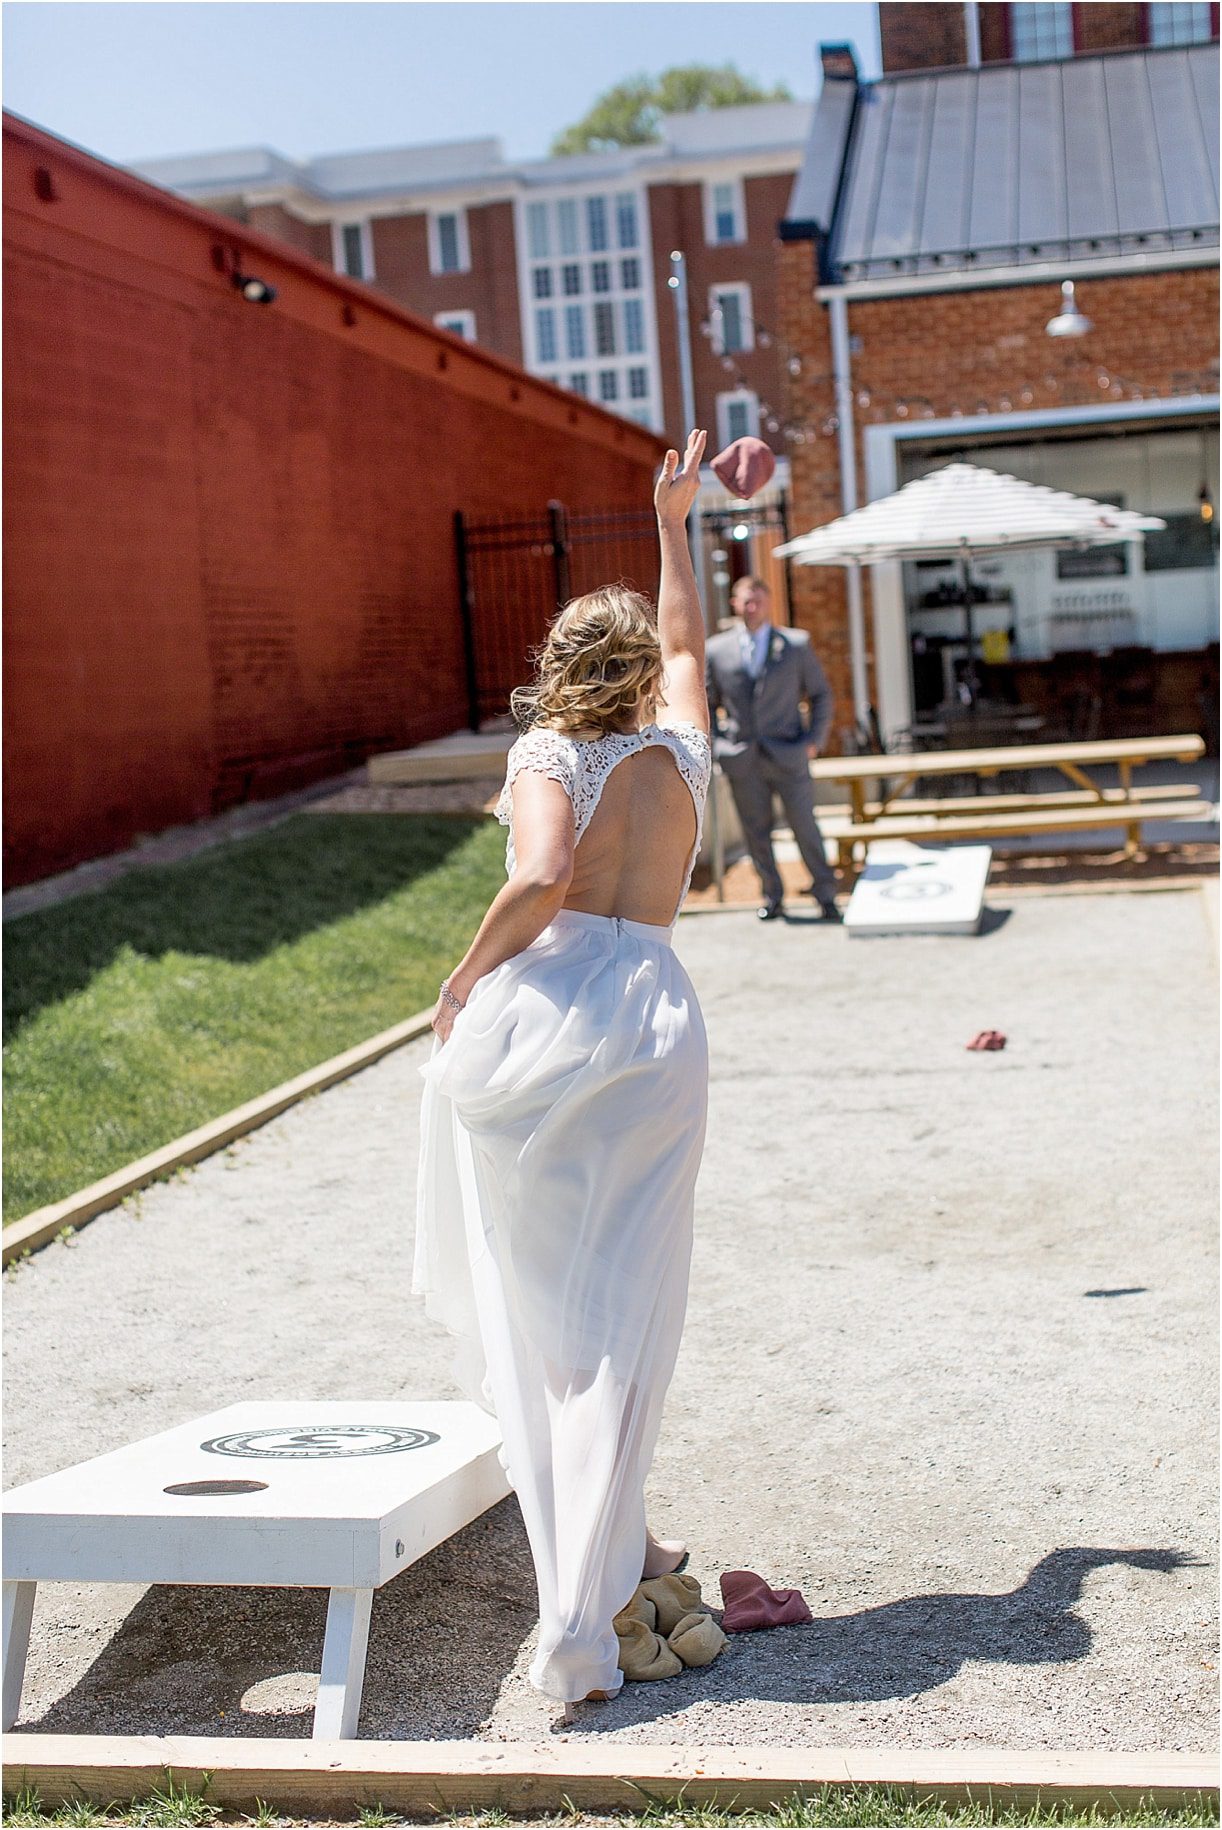 Adorably Detailed Brewery Wedding Styled Shoot | Hill City Bride Virginia Wedding Blog